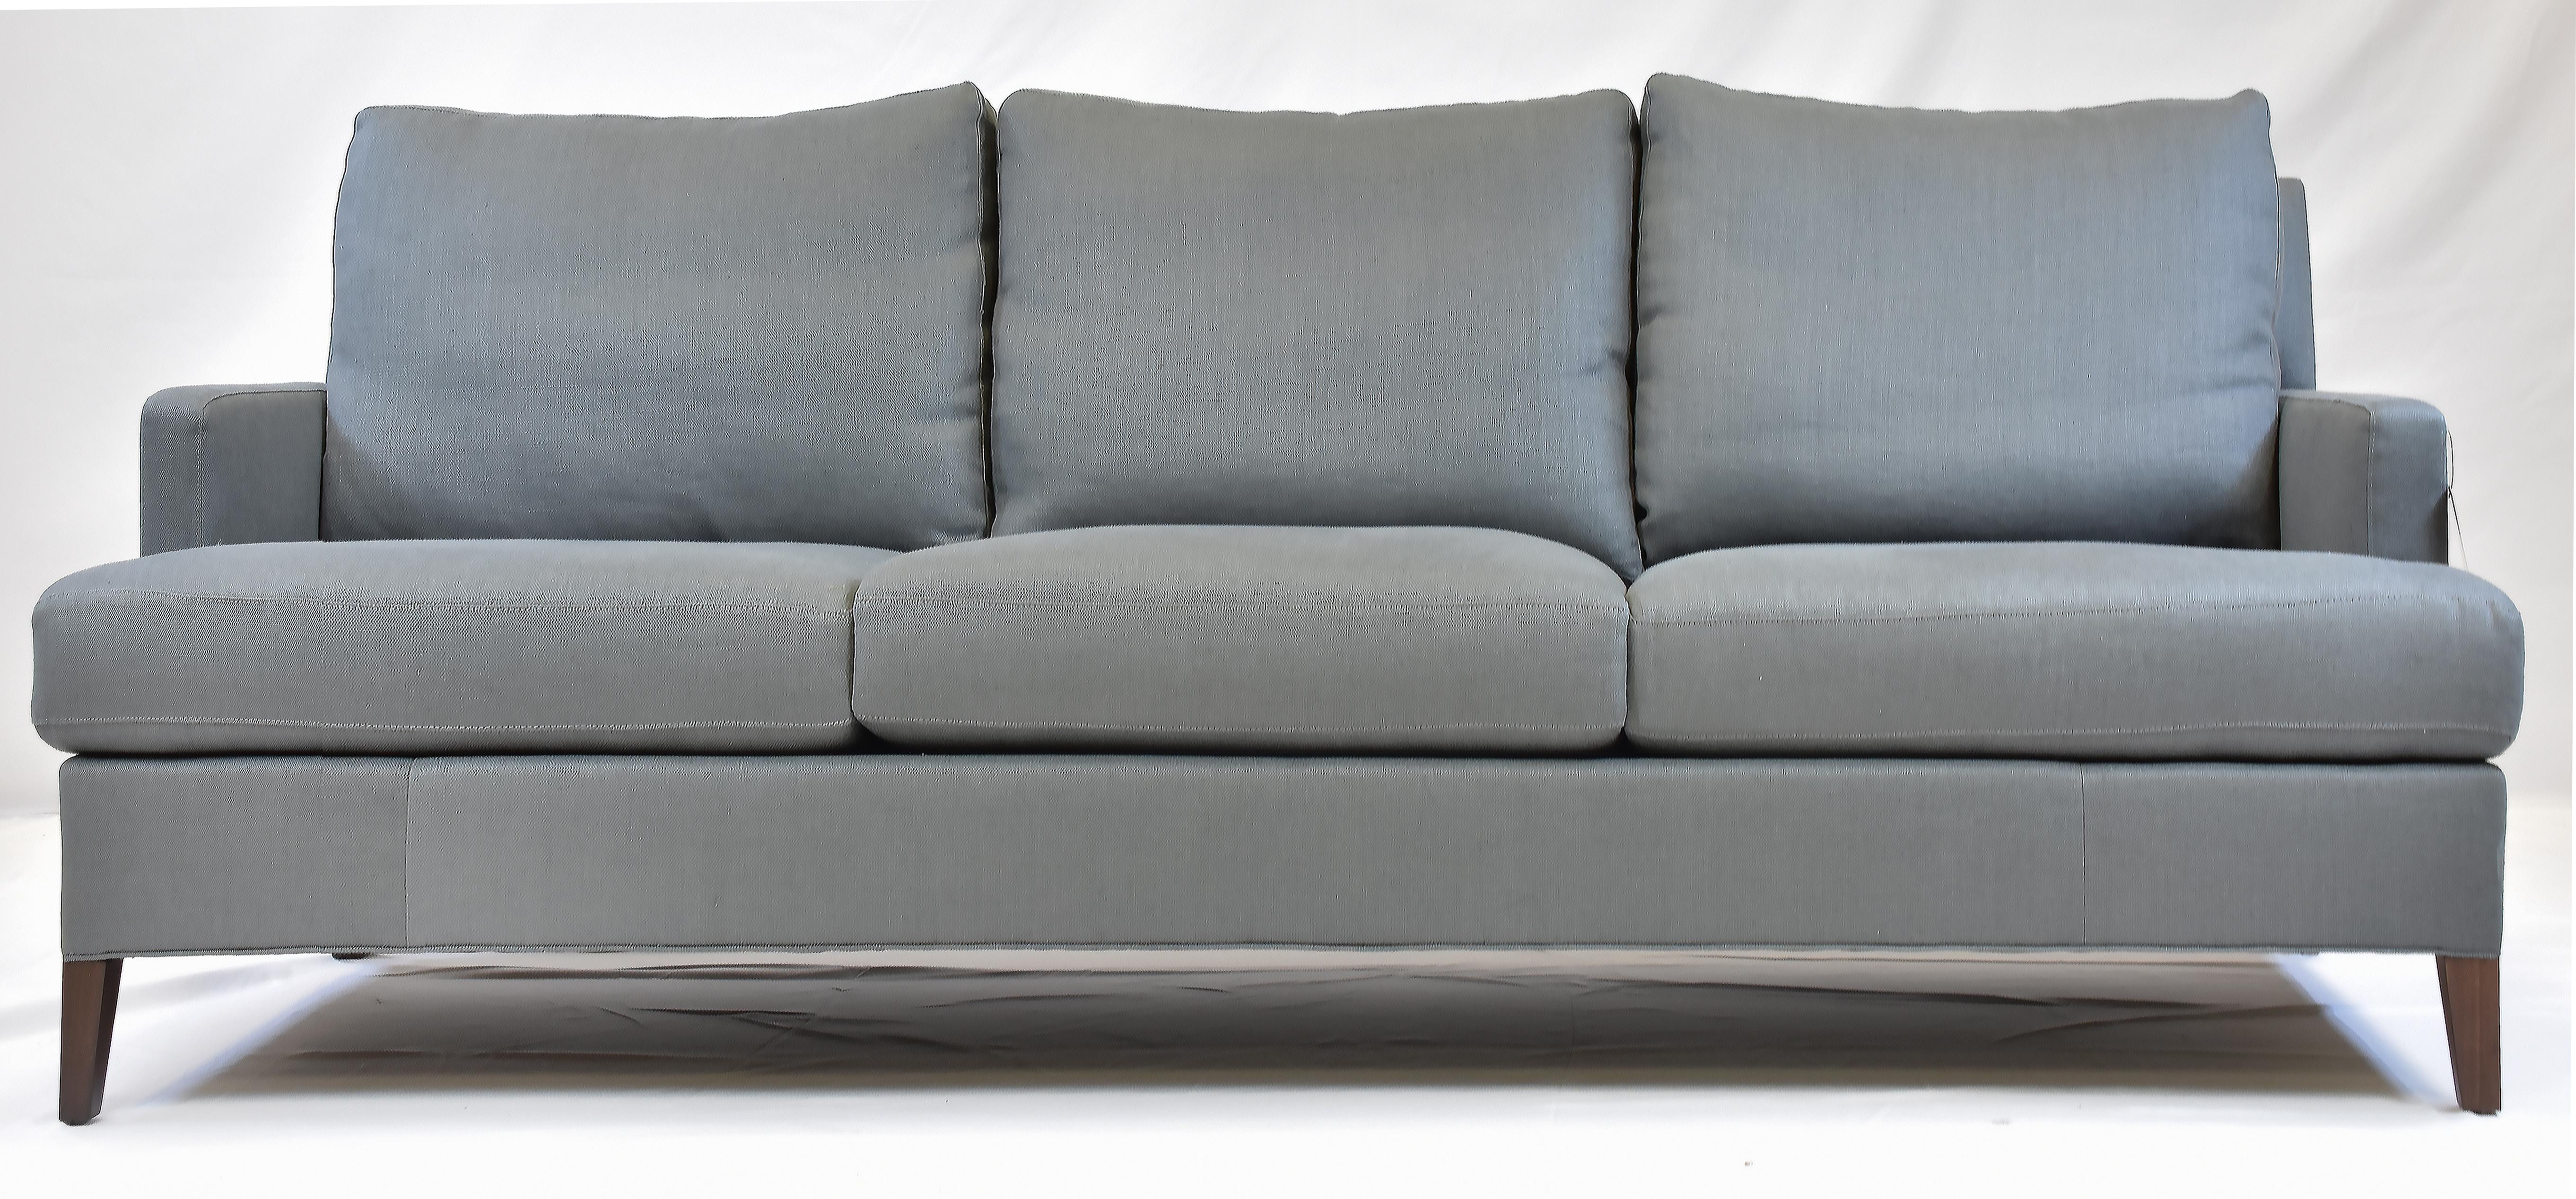 Mid-Century Modern Le Jeune Upholstery Hollywood Sofa Showroom Model For Sale